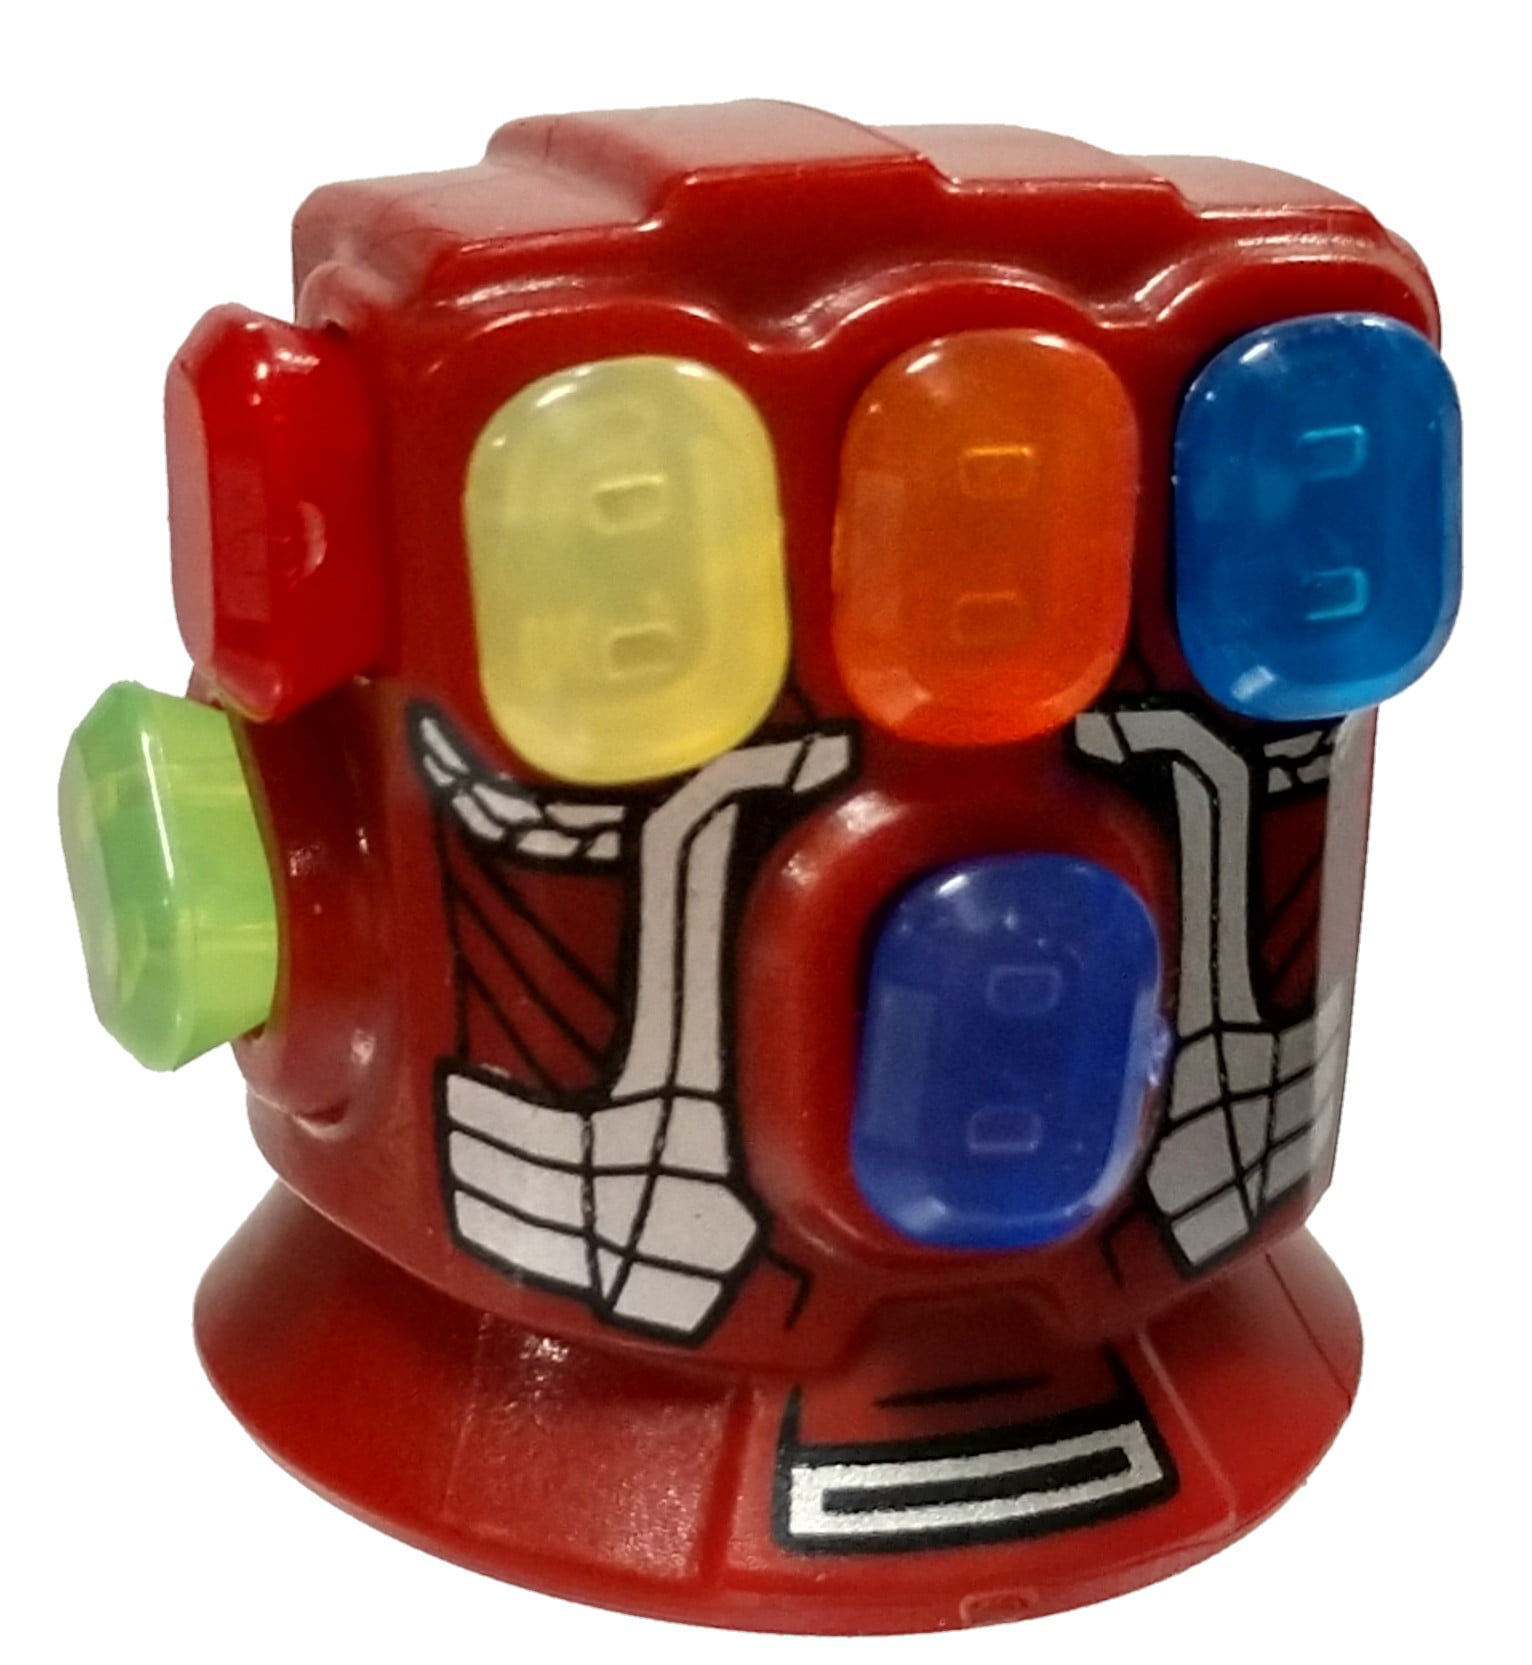 LEGO Marvel Avengers Endgame Iron Man 